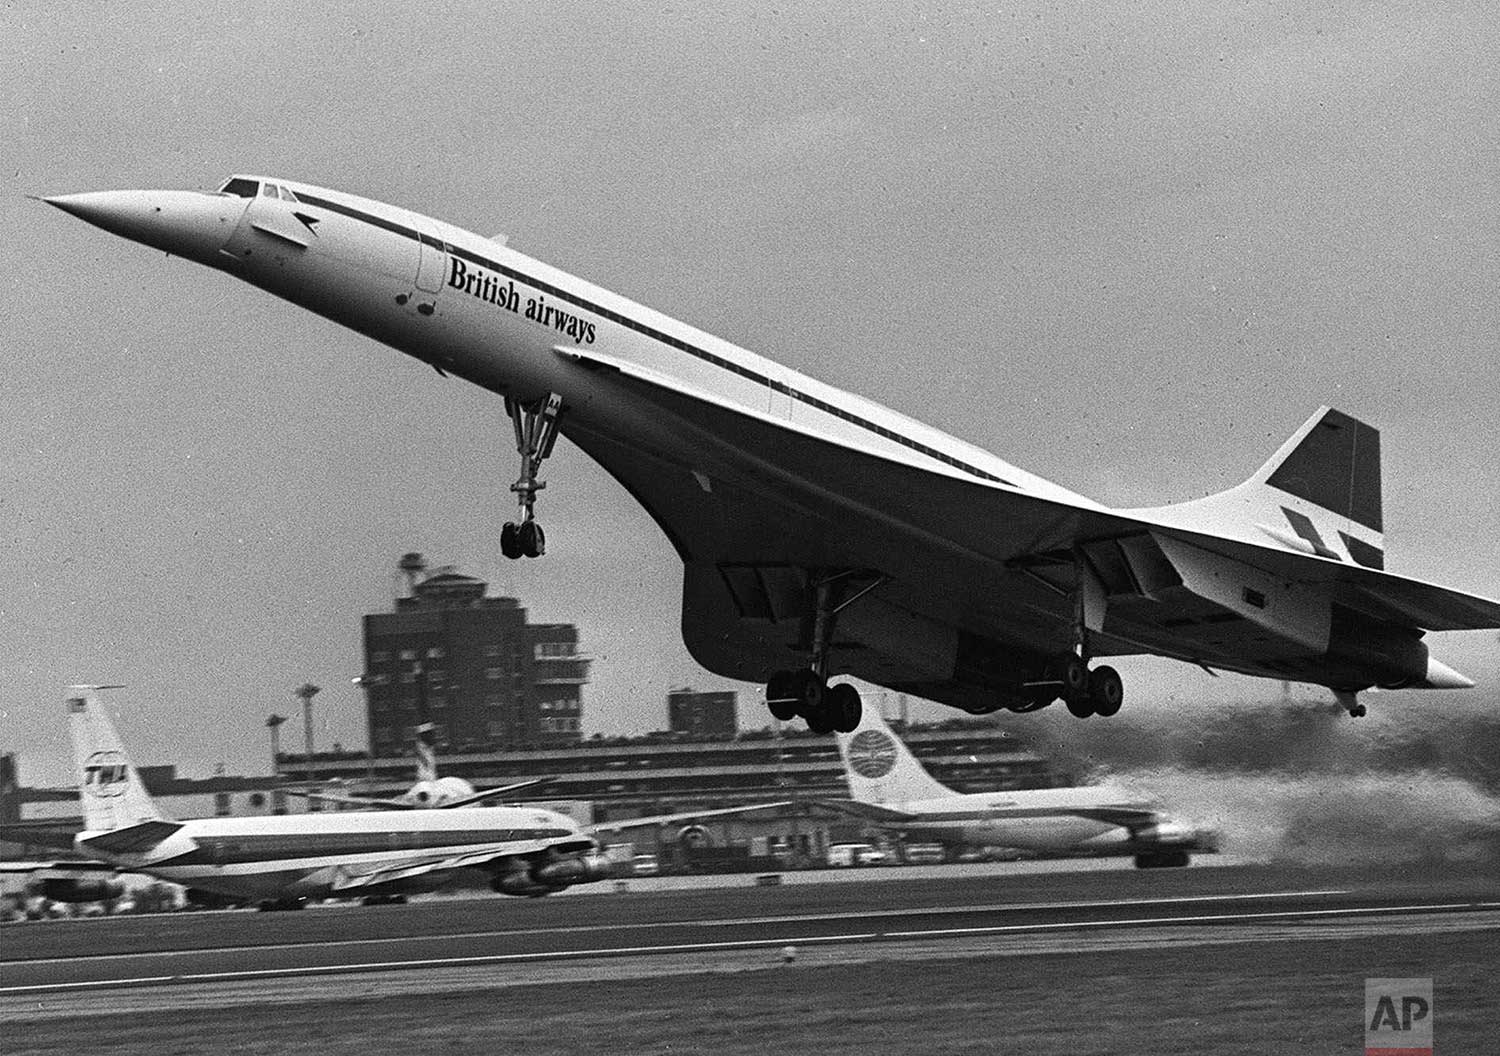 British Airways Concorde Wallpapers